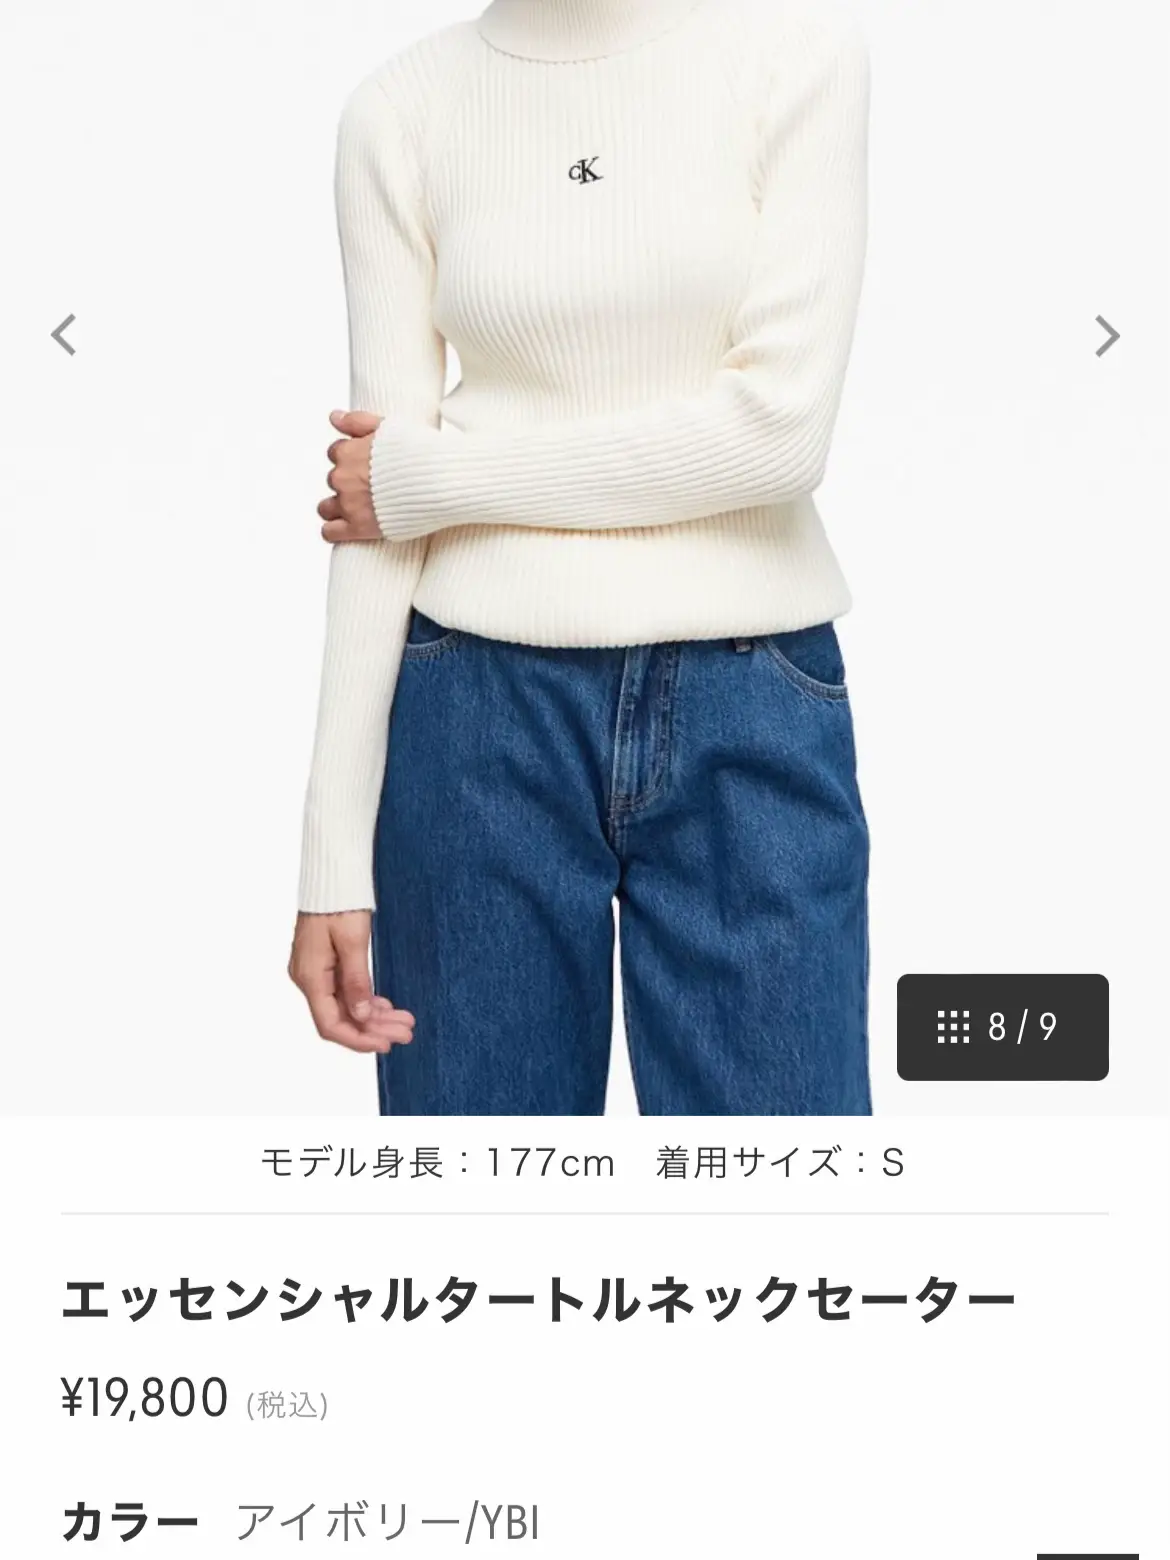 Calvin Klein購入品🛍 | Kanakoが投稿したフォトブック | Lemon8